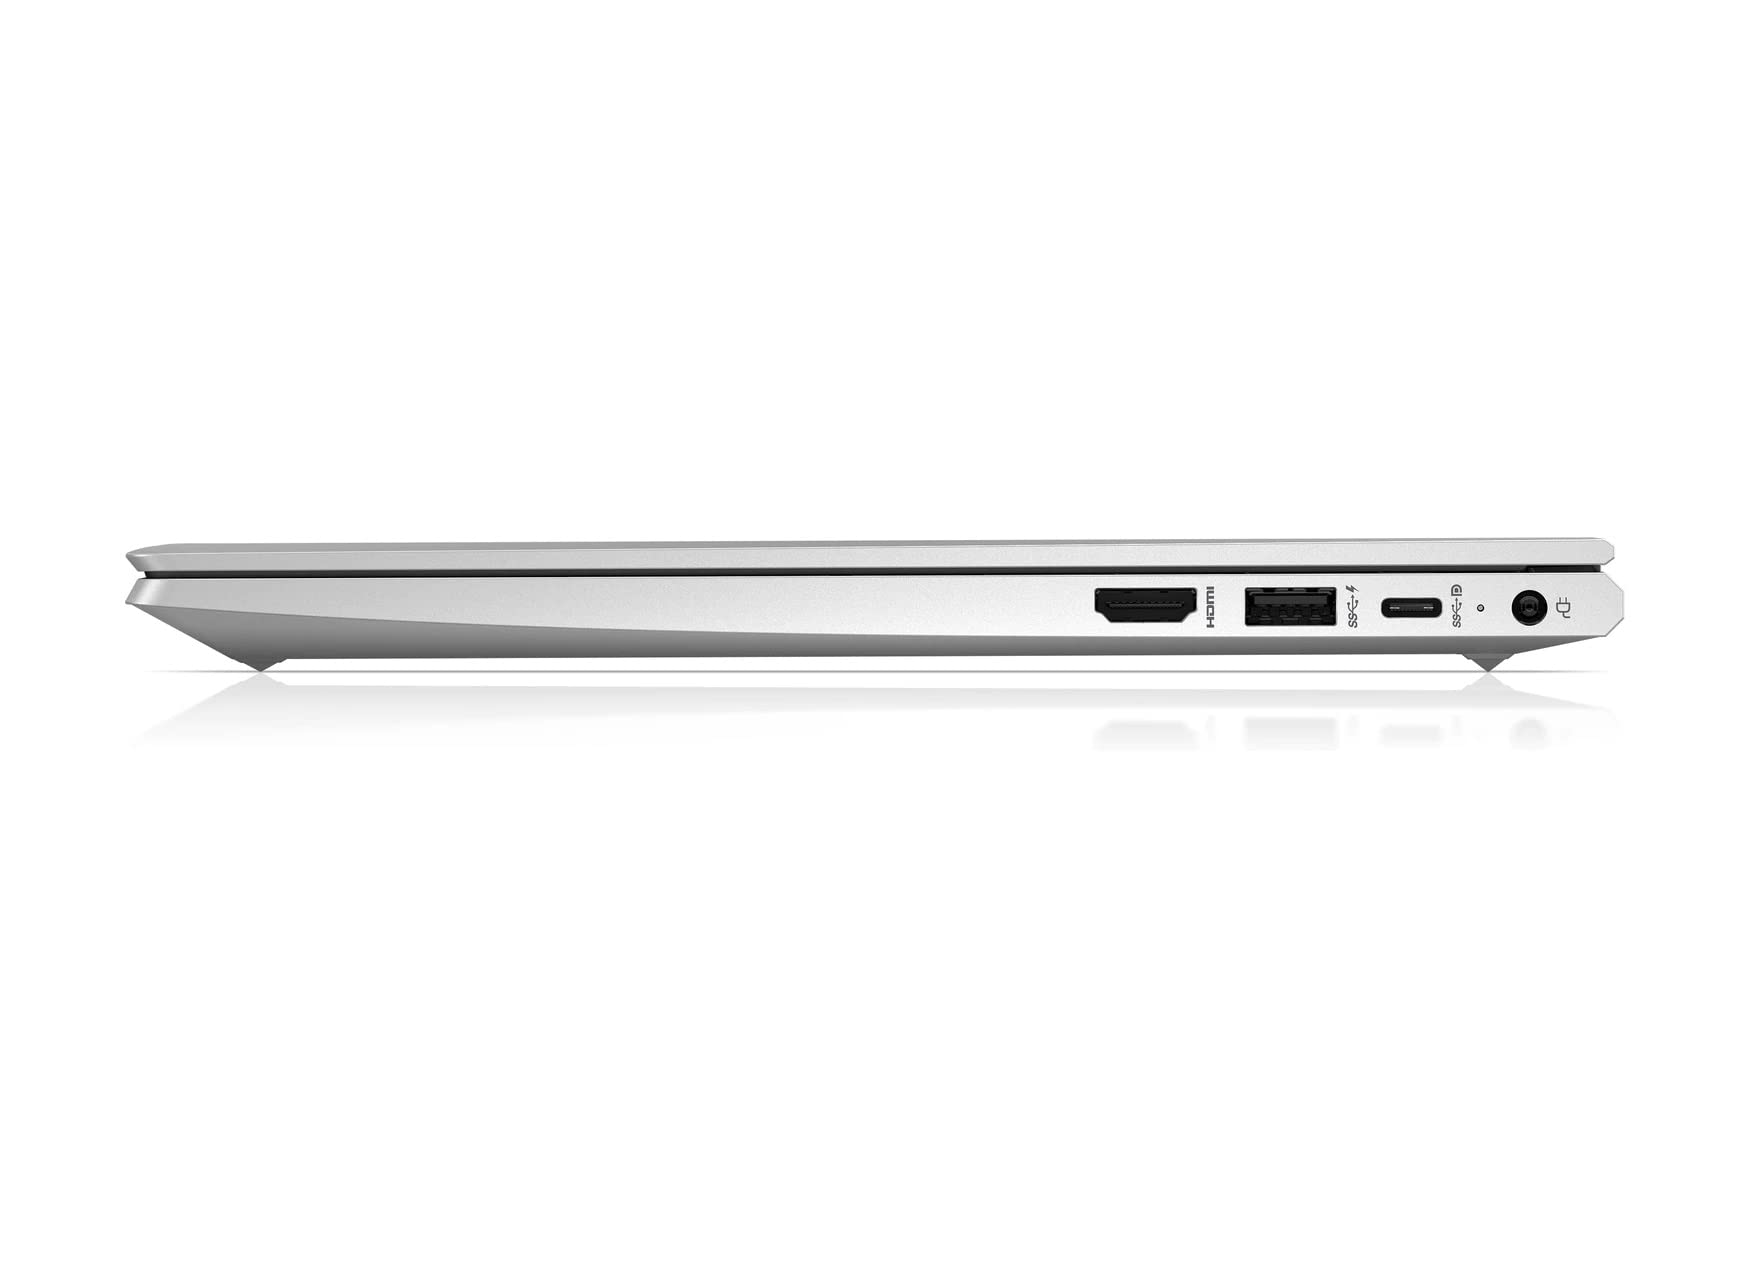 HP ProBook 430 G8 13.3" FullHD Laptop - Intel Core i5-1135G7 (4 Cores, 4.2GHz), 16GB DDR4, 1TB SSD, Iris X Graphics, Wireless 11ac & Bluetooth 5, Backlit Keyboard, Windows 11 Pro